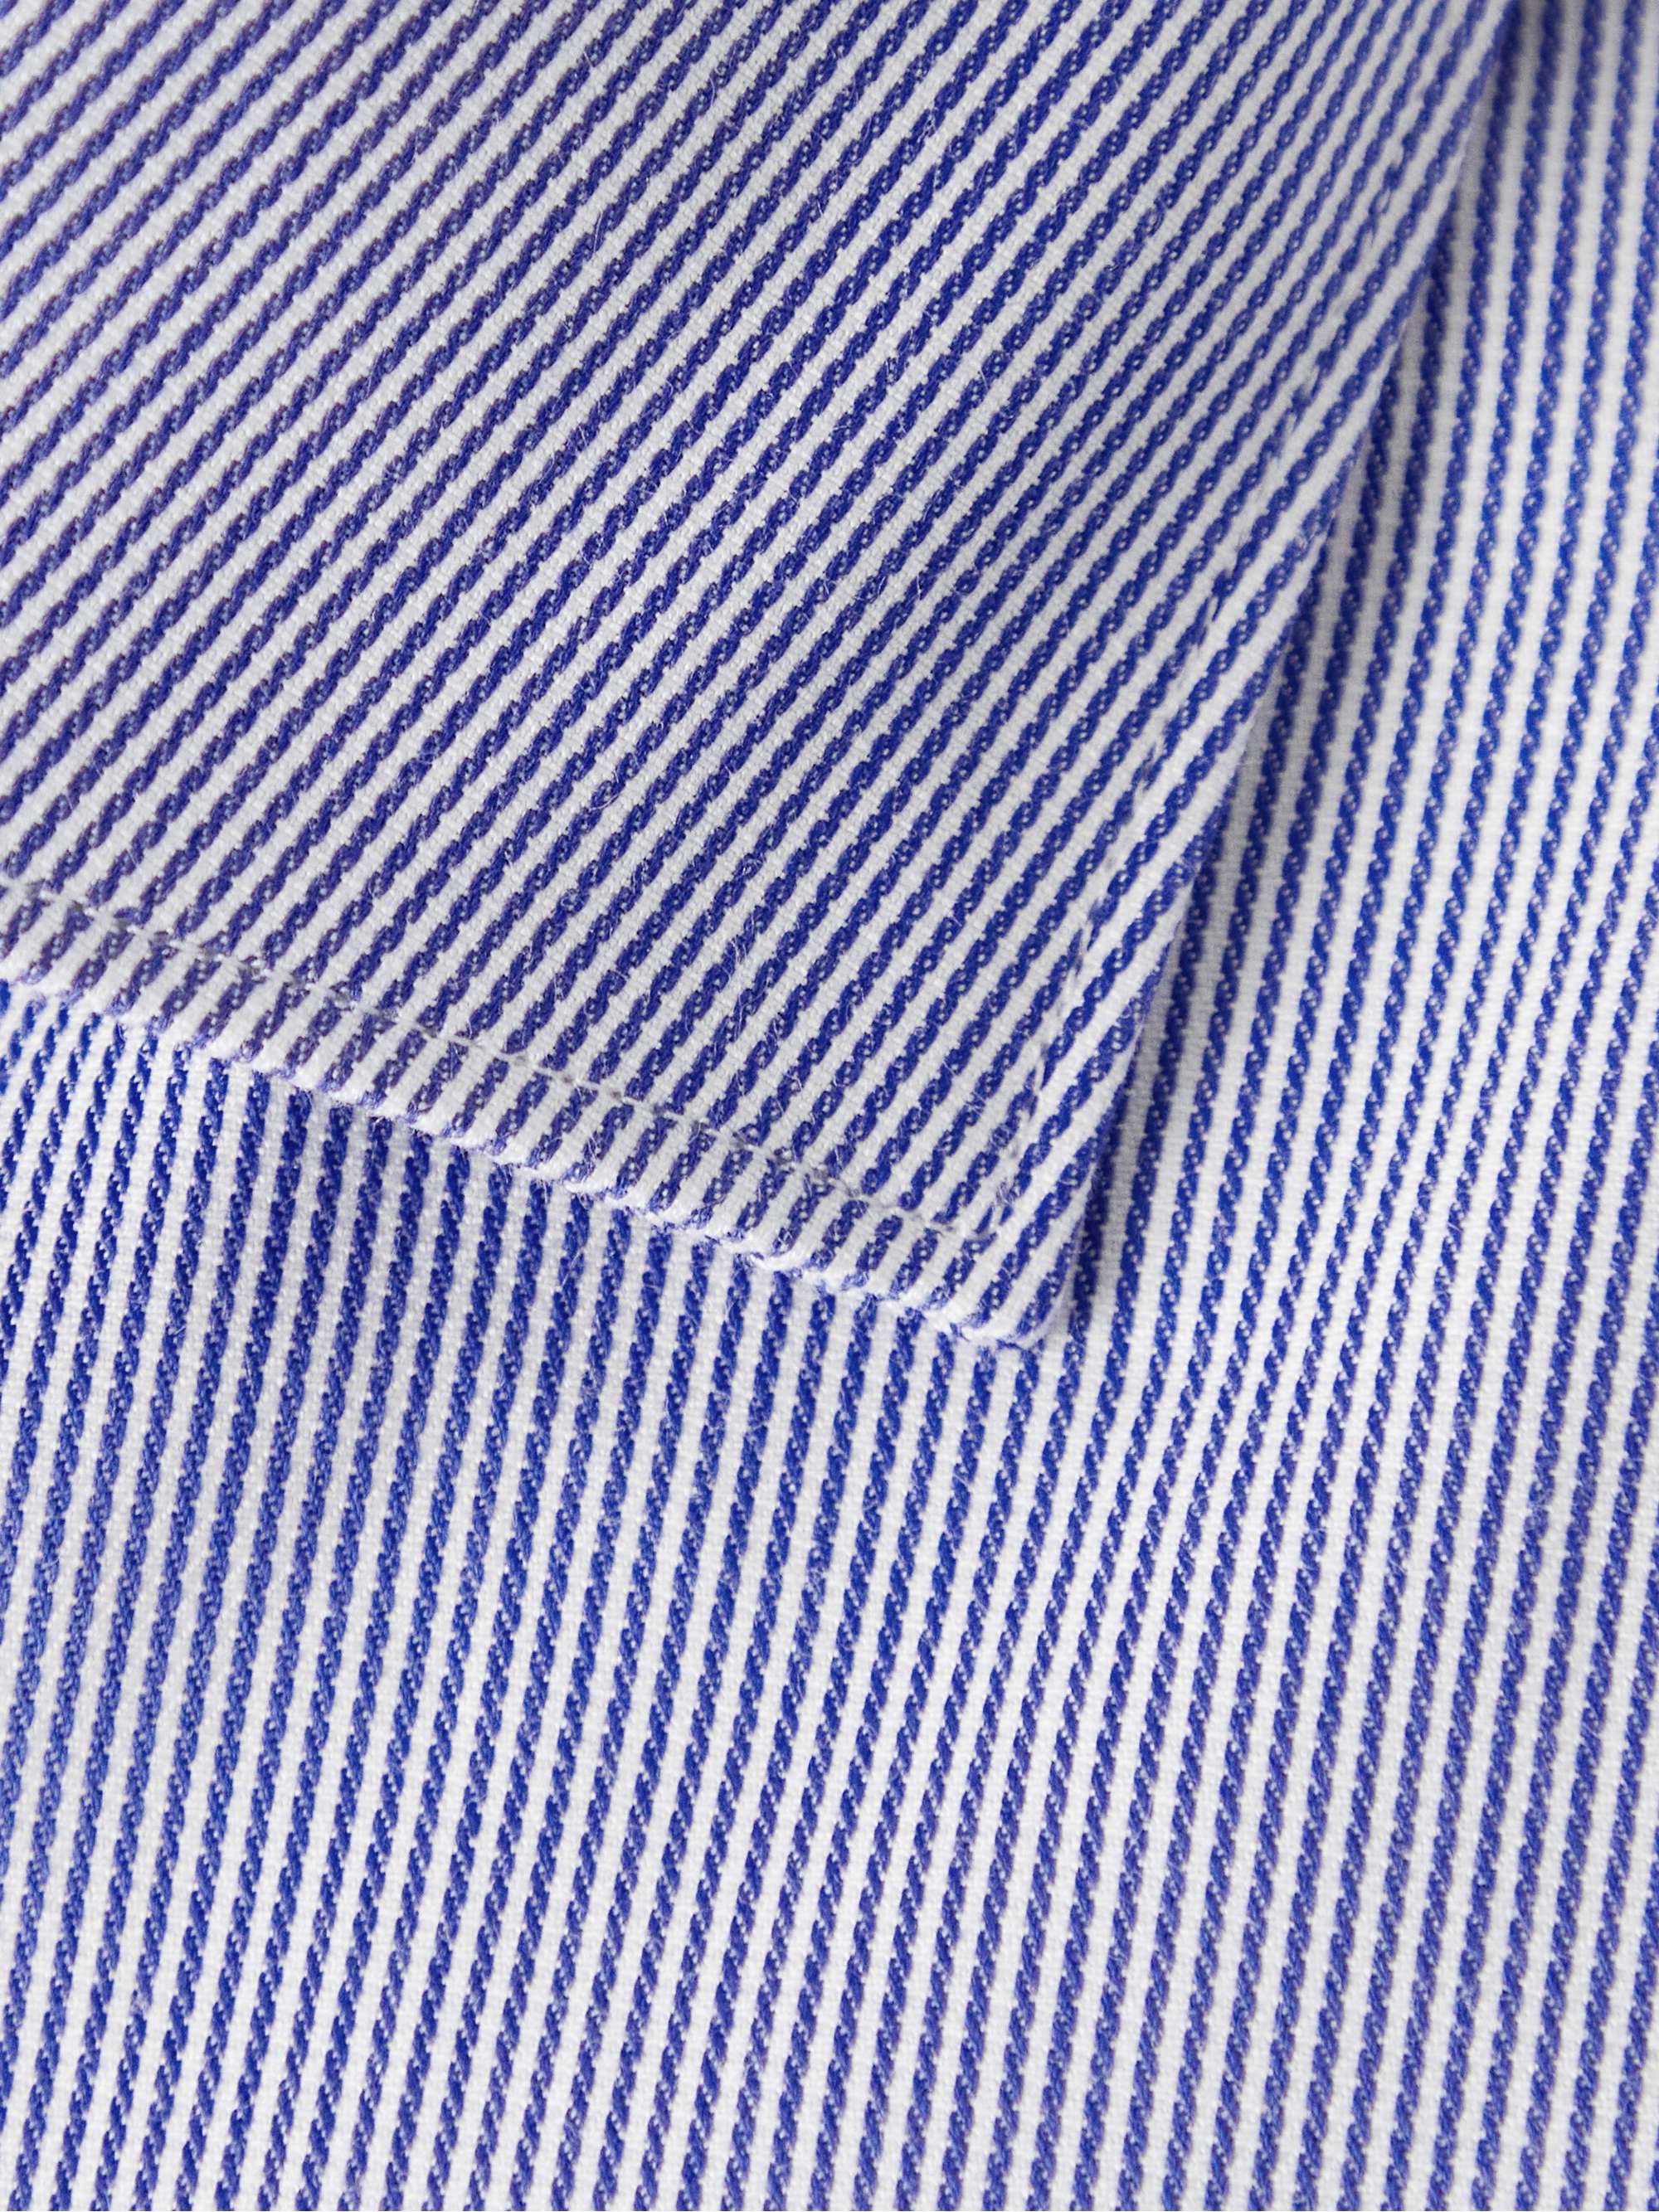 CANALI Cutaway-Collar Striped Impeccabile Cotton-Blend Shirt